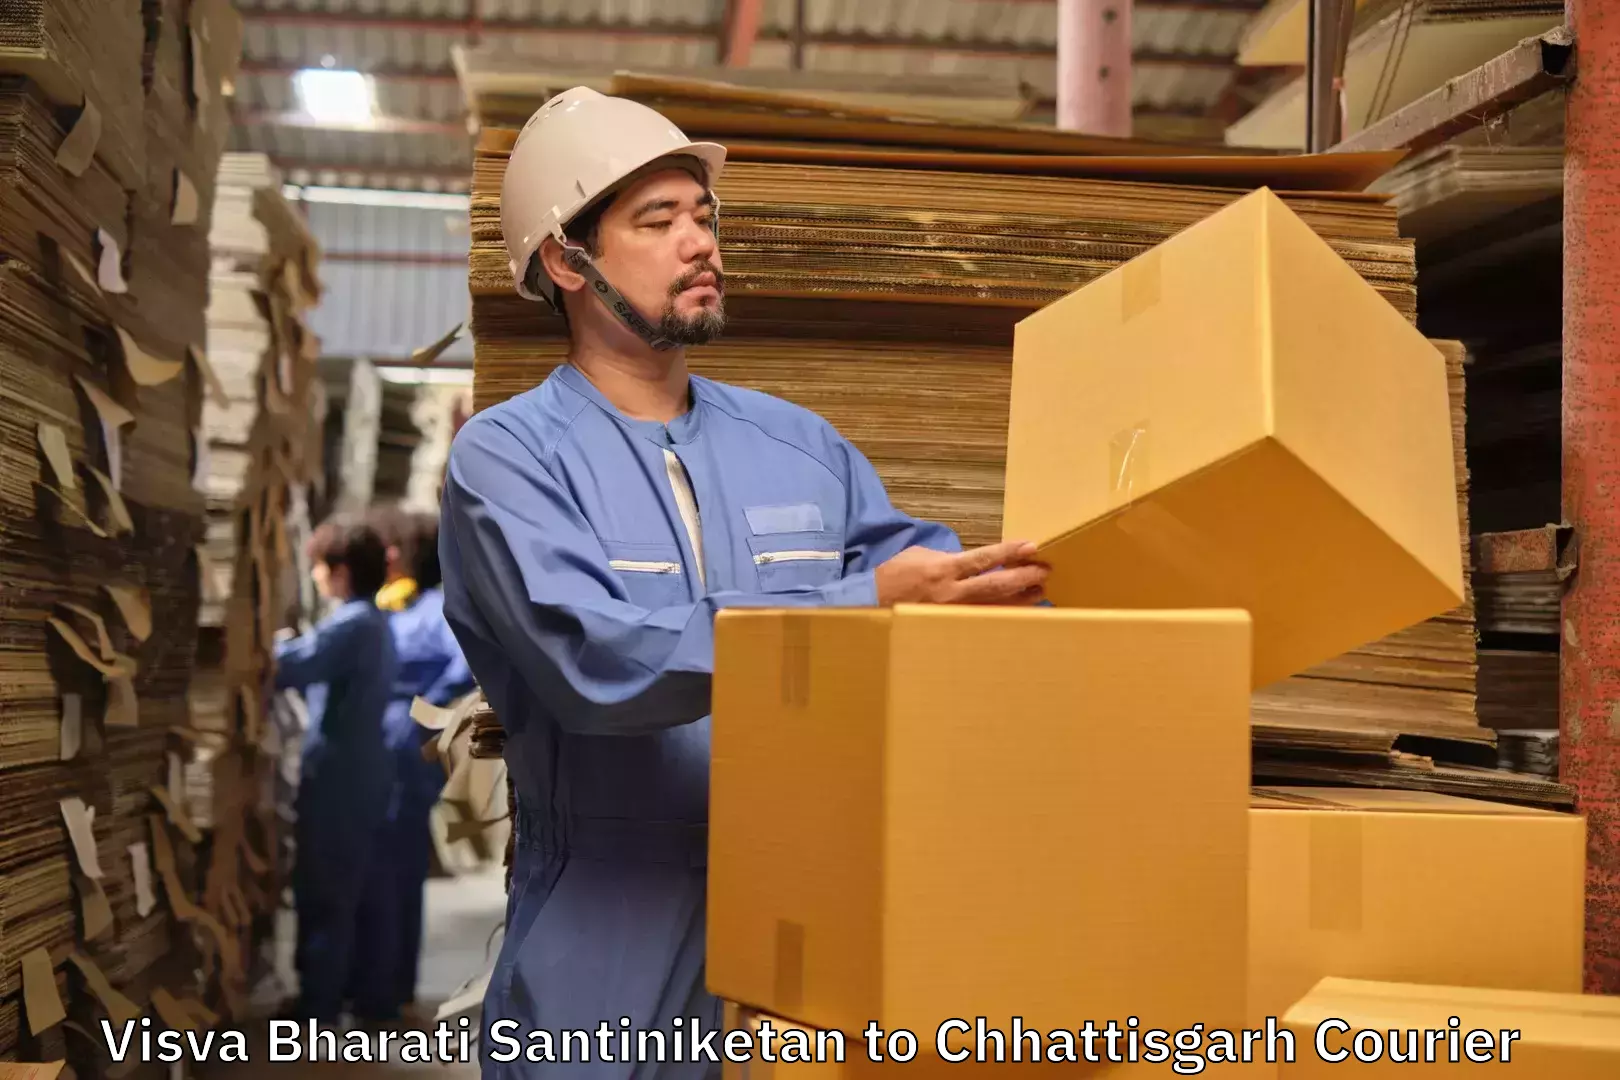 Luggage delivery app Visva Bharati Santiniketan to Korea Chhattisgarh